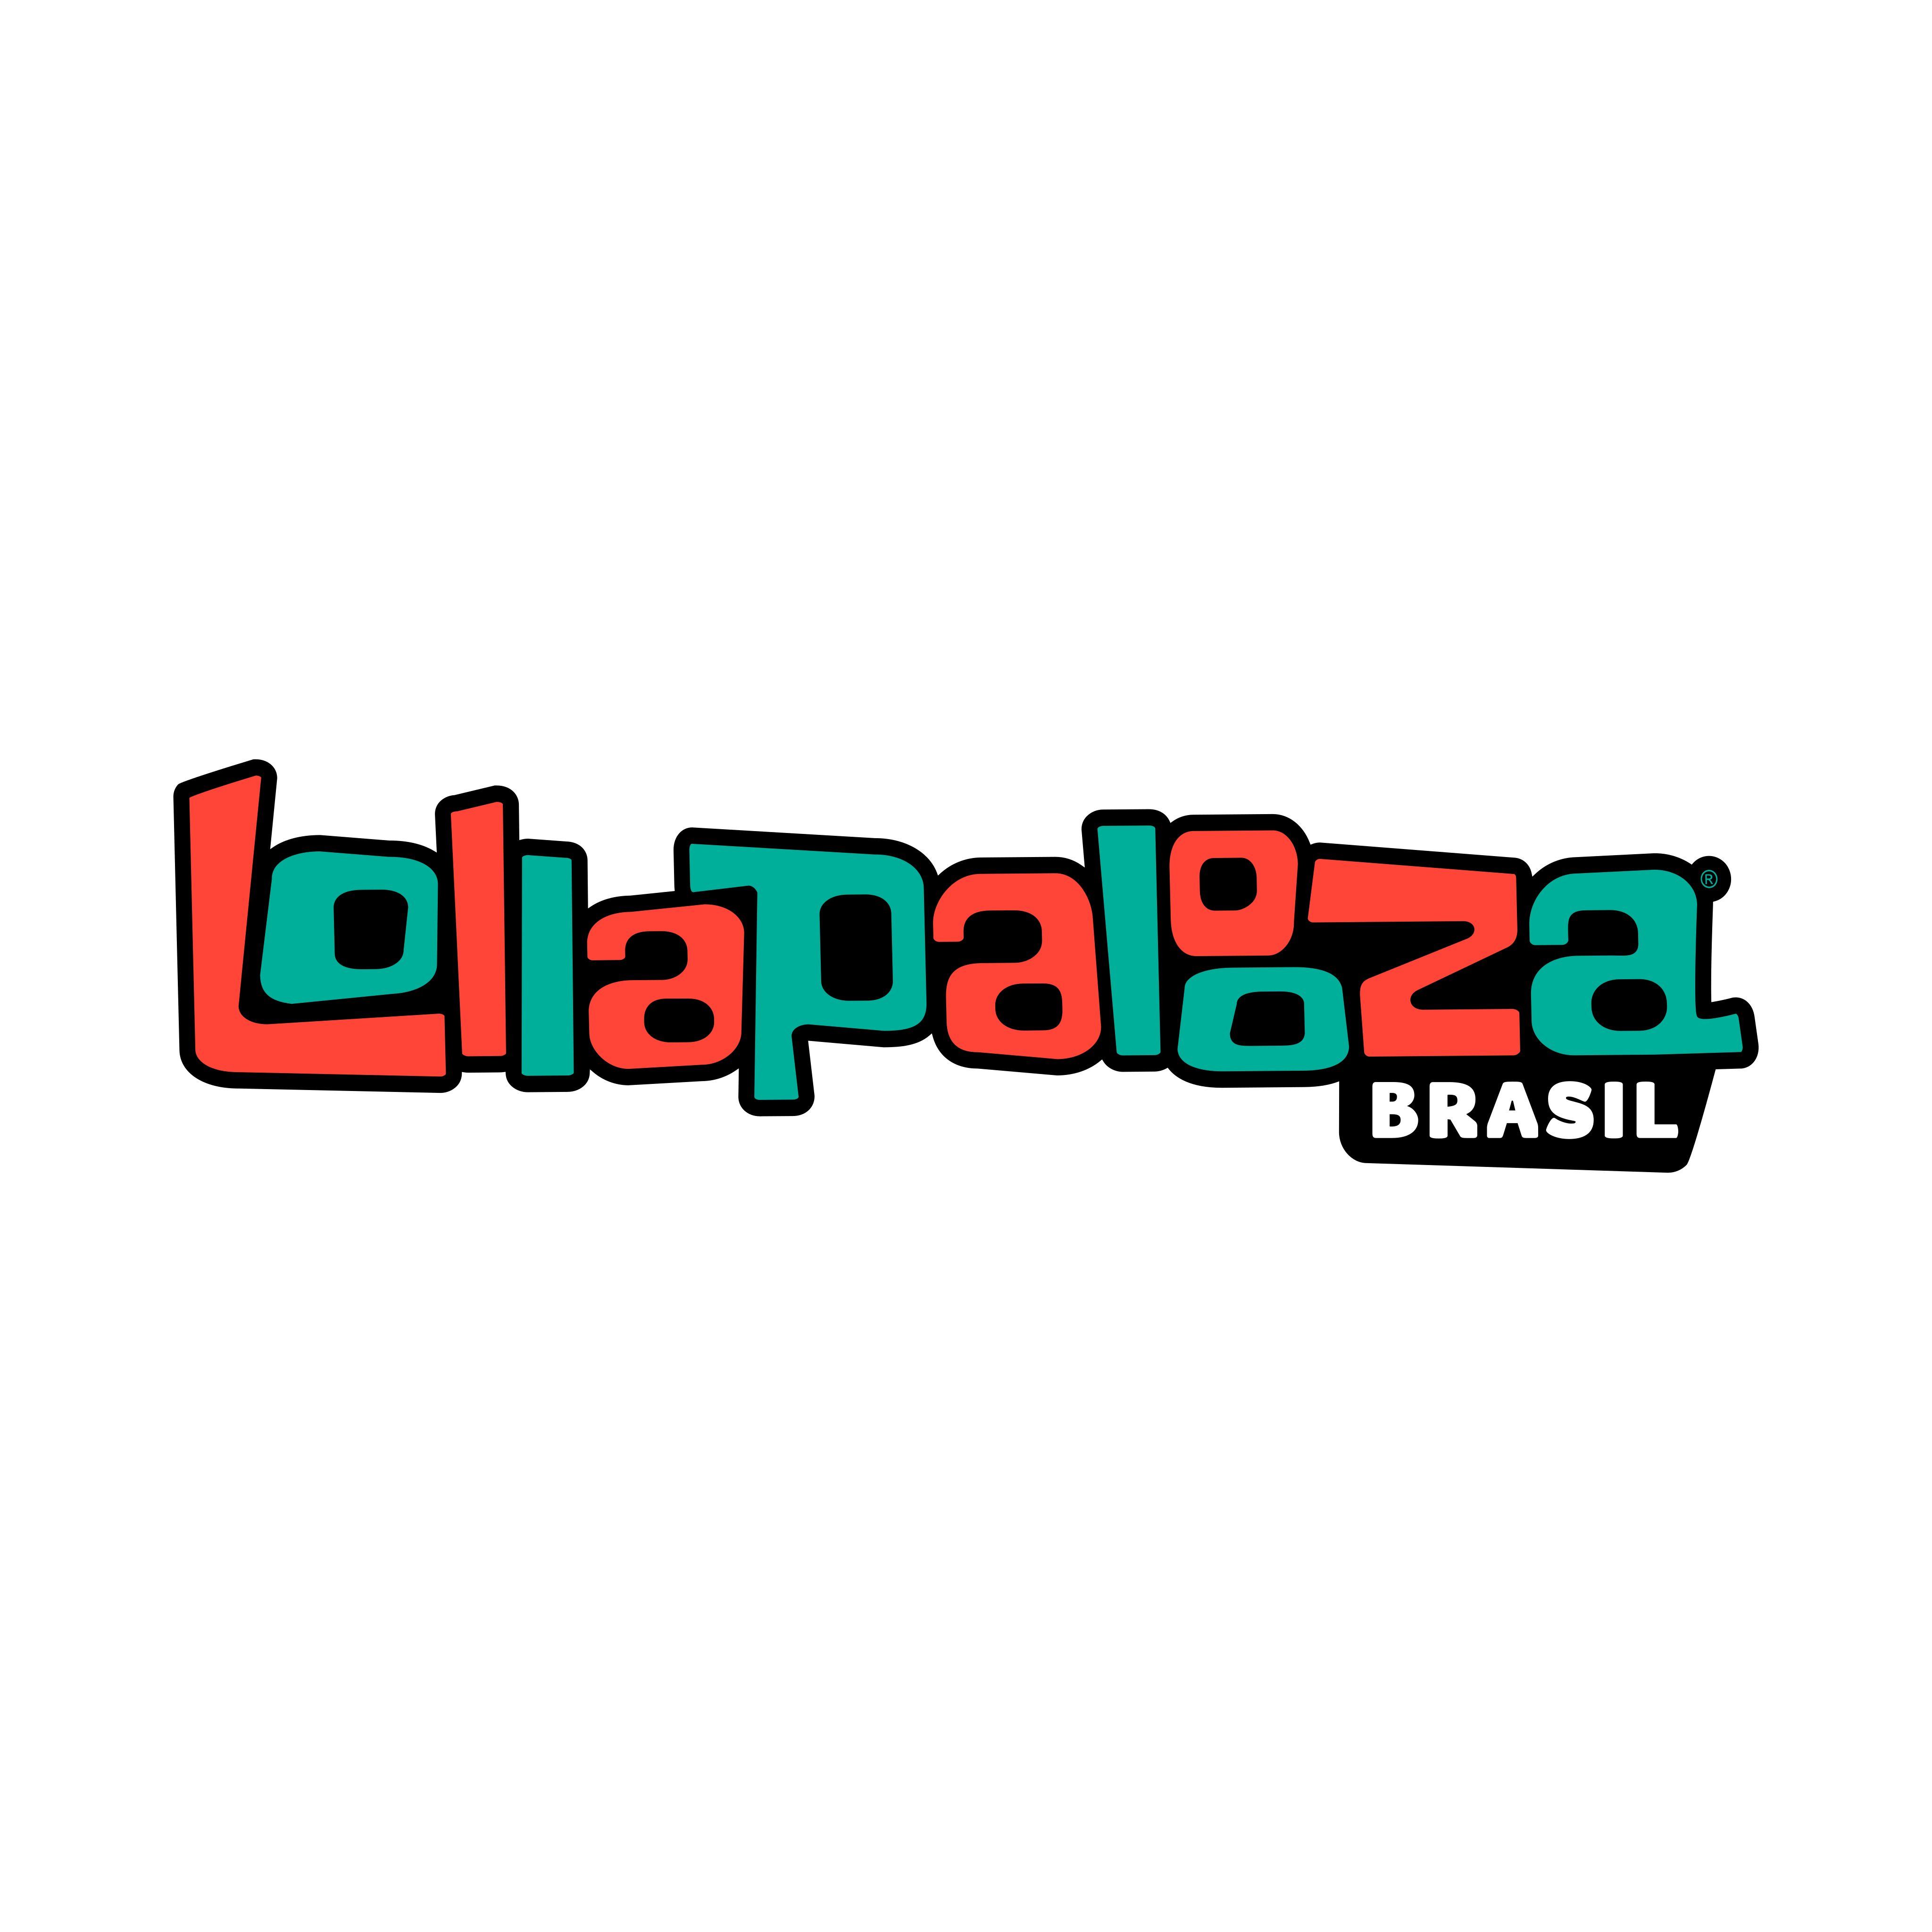 Lollapalooza Brasil Logo PNG.